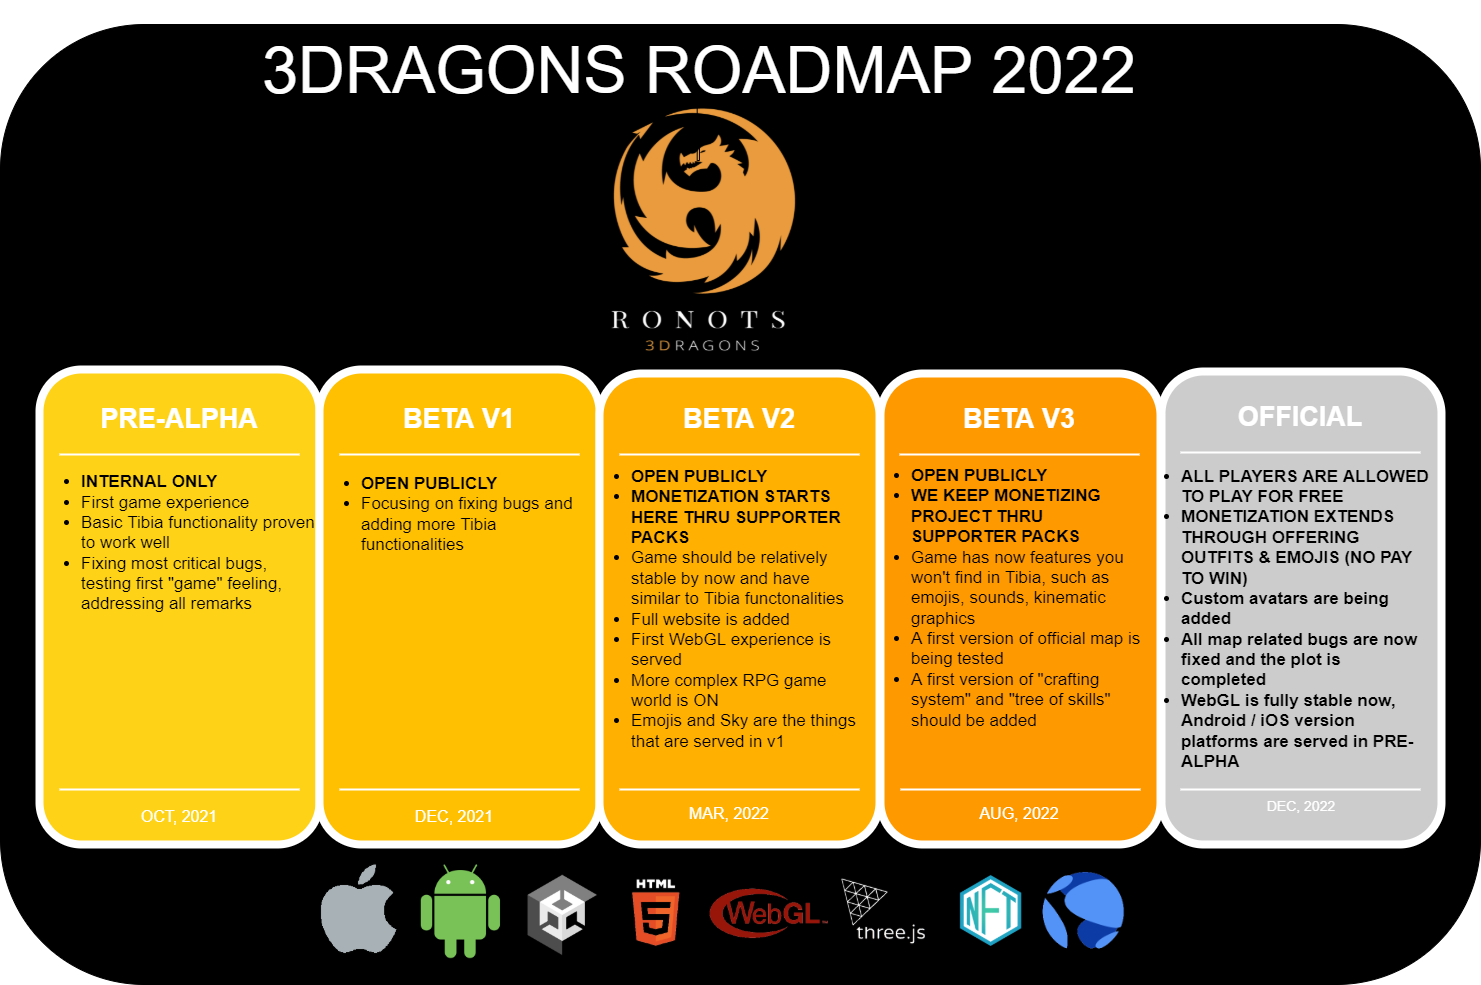 [Zapowiedź] [POLAND] Tibia 3D startuje drugi serwer Beta v2 18 marca-3dragons-roadmap-2022.png